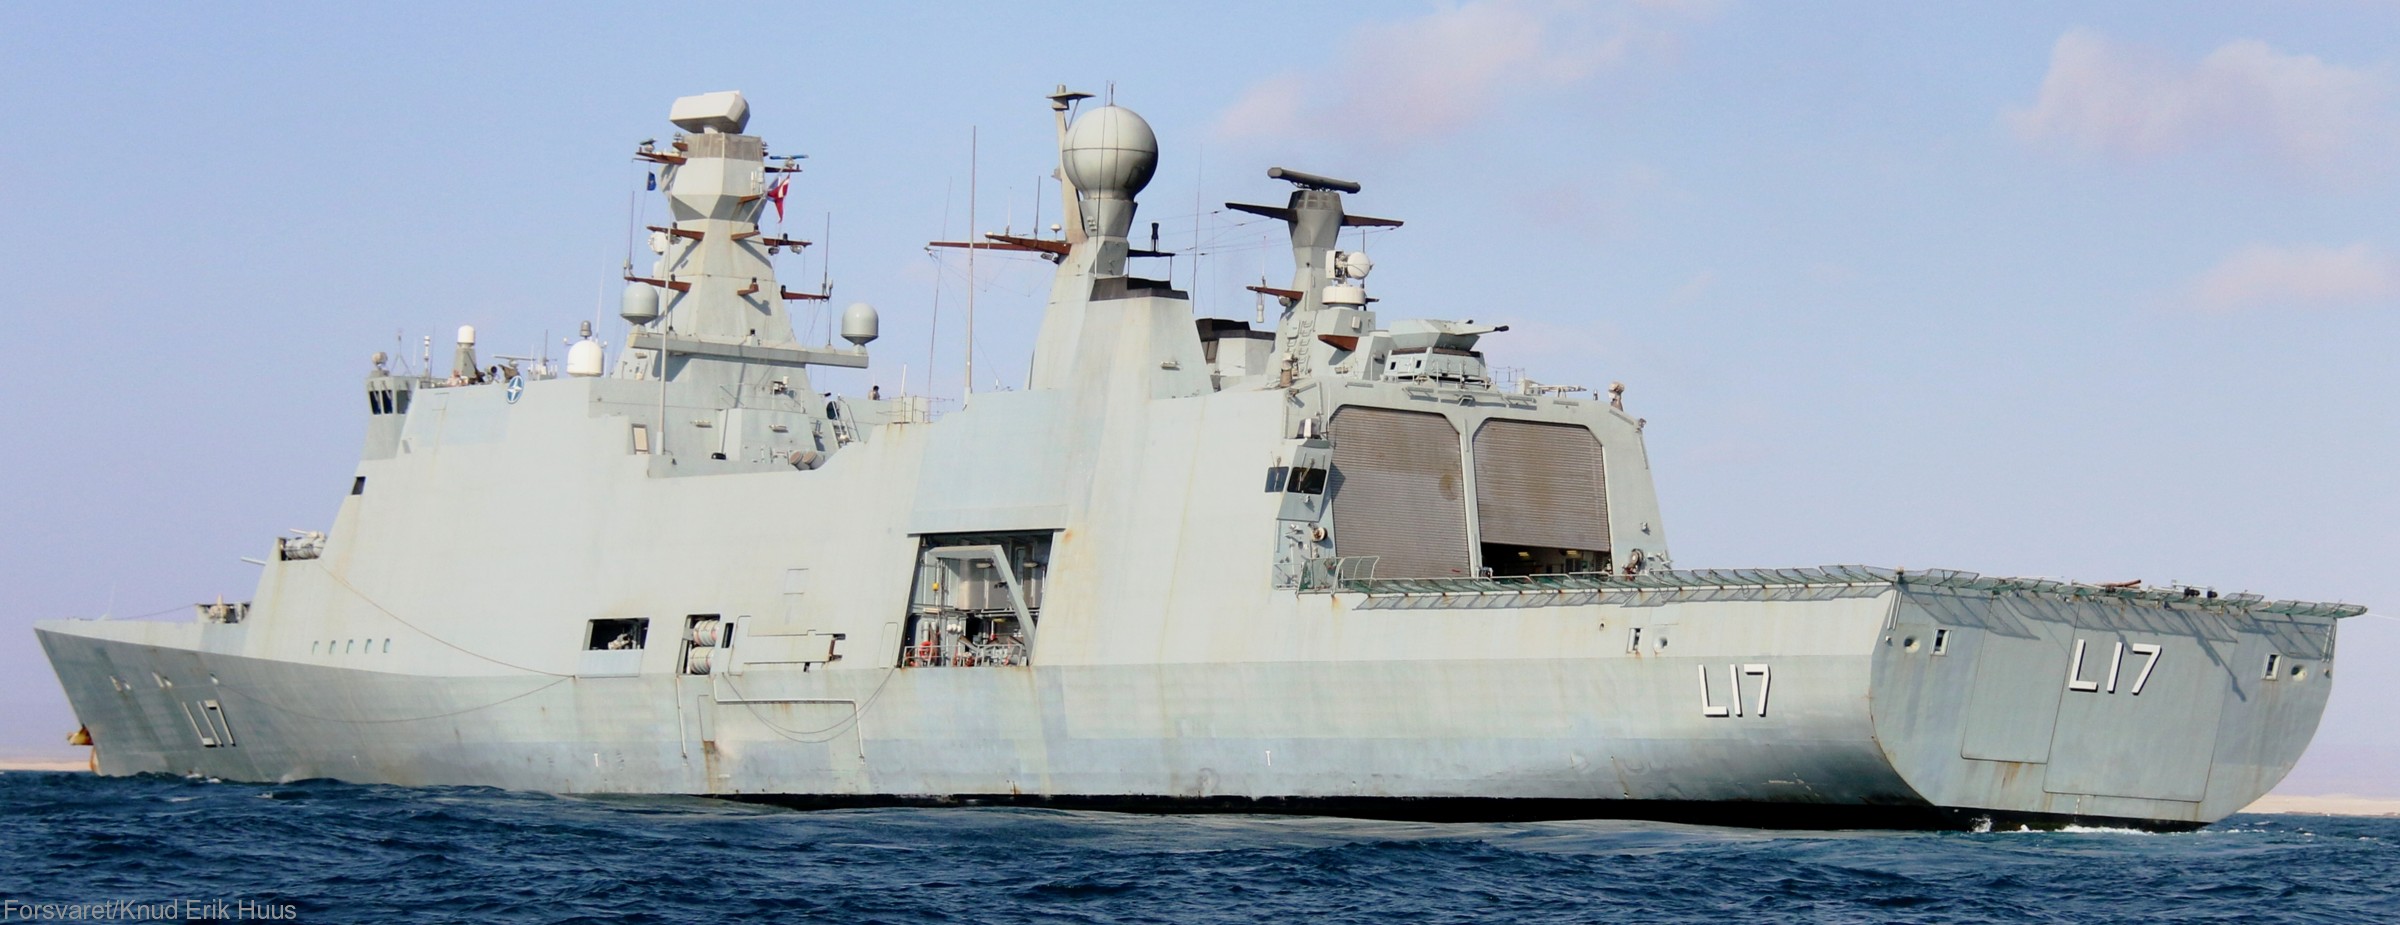 f-342 hdms esbern snare l-17 frigate command support ship royal danish navy 09 kongelige danske marine